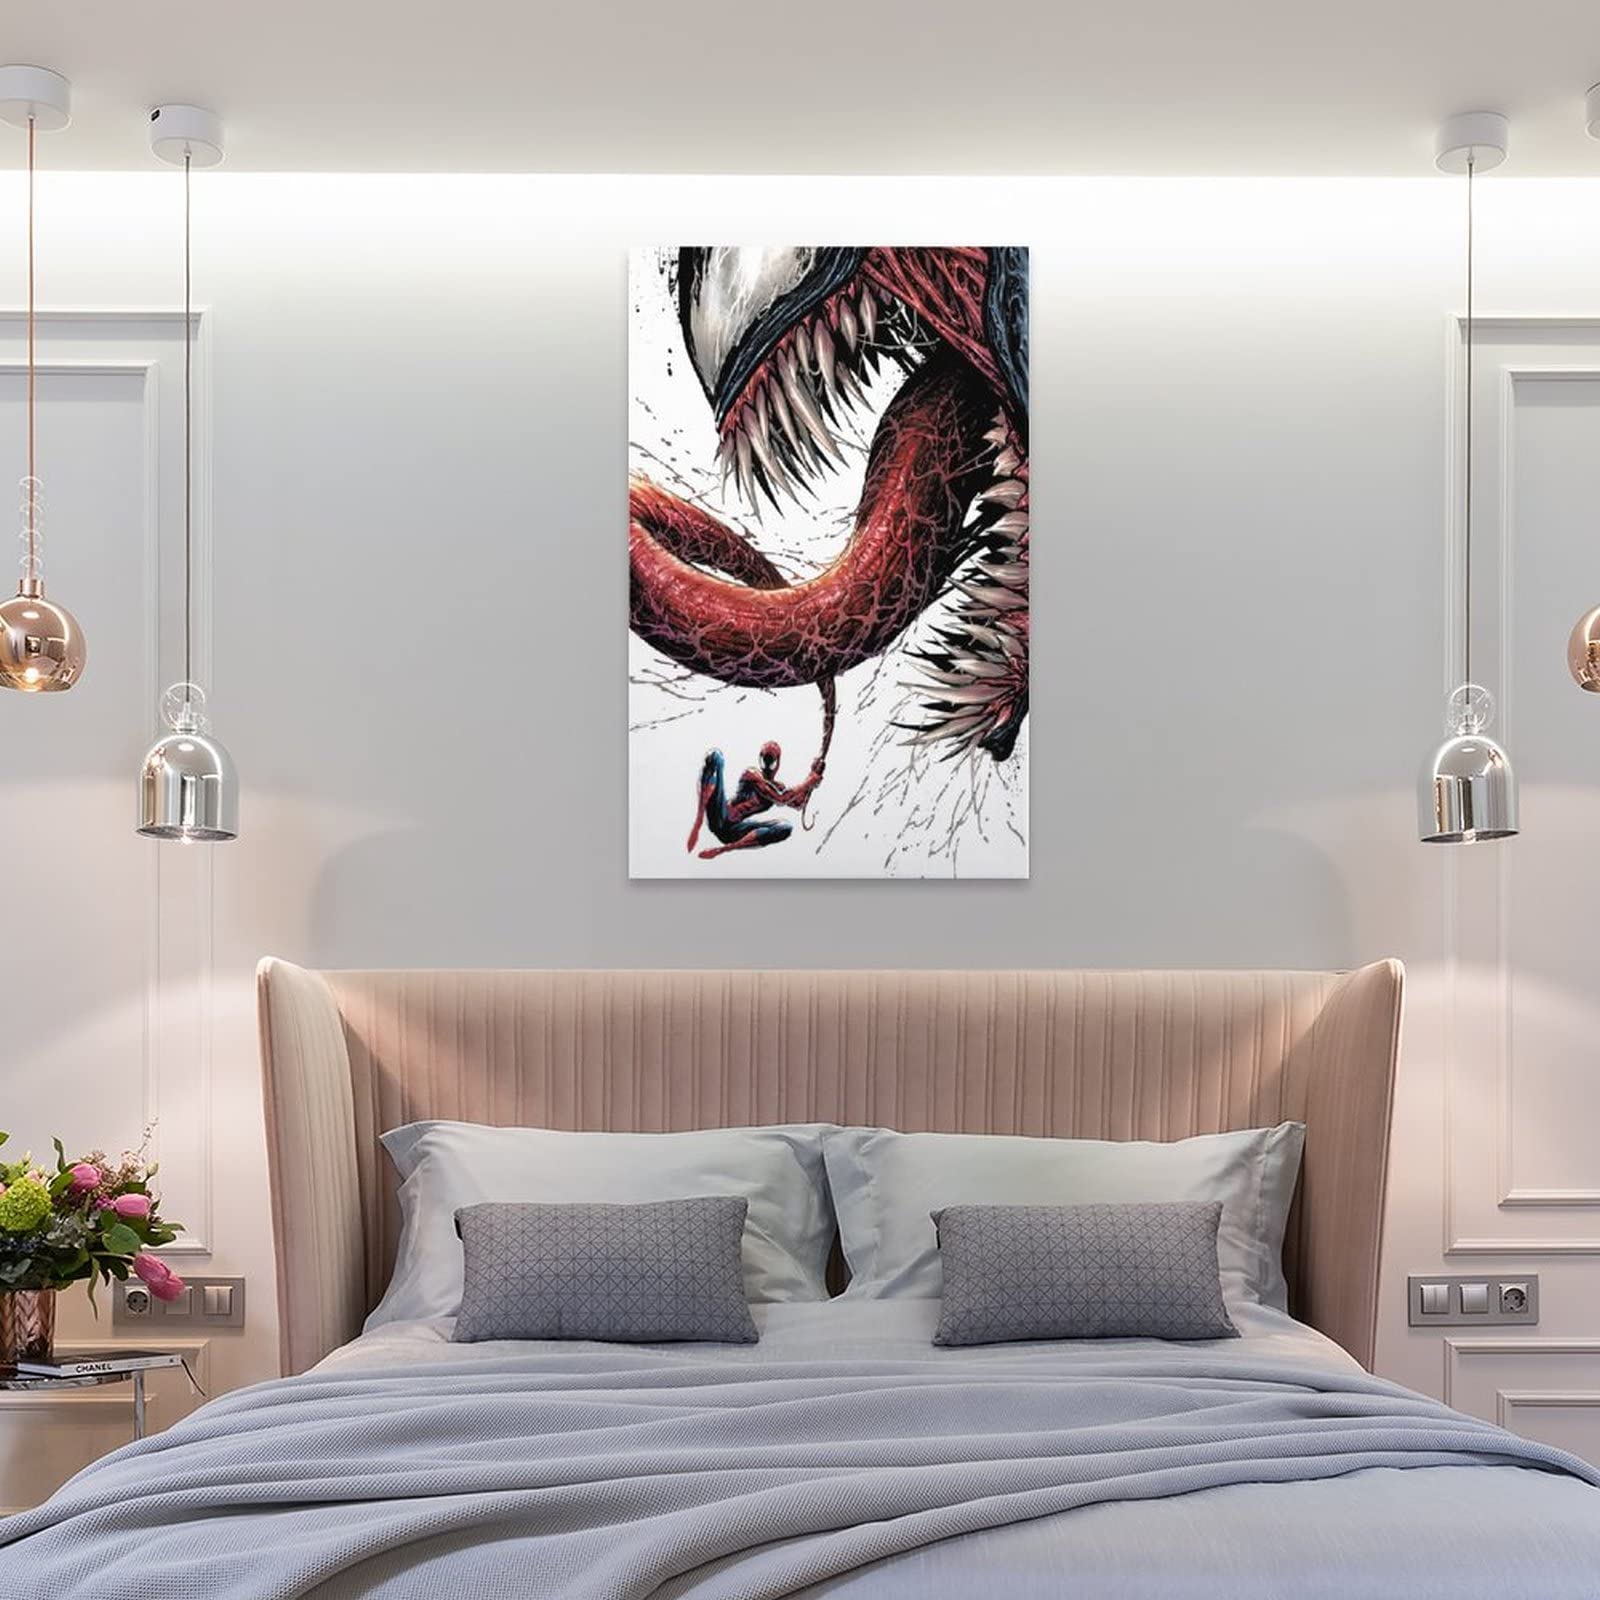 Mua jwjkdsld Anime Posters Venoms Vs super spider art man art ...